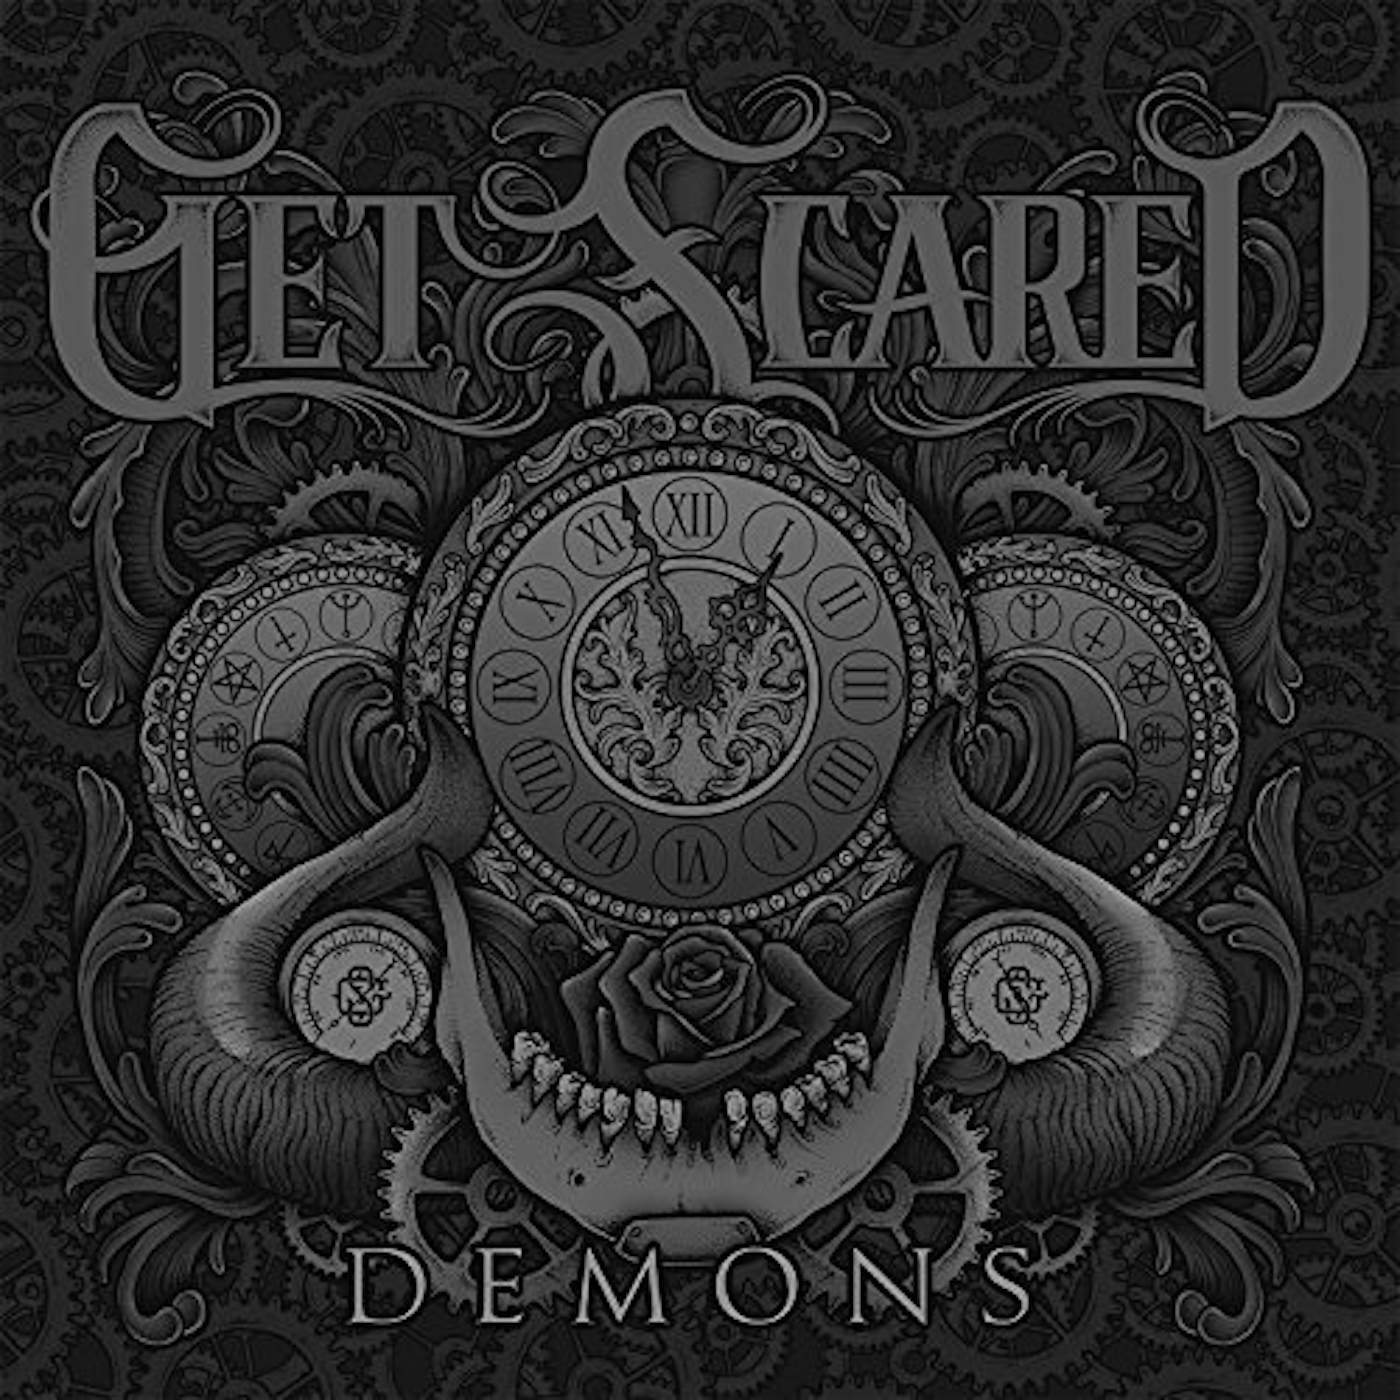 Get Scared DEMONS CD